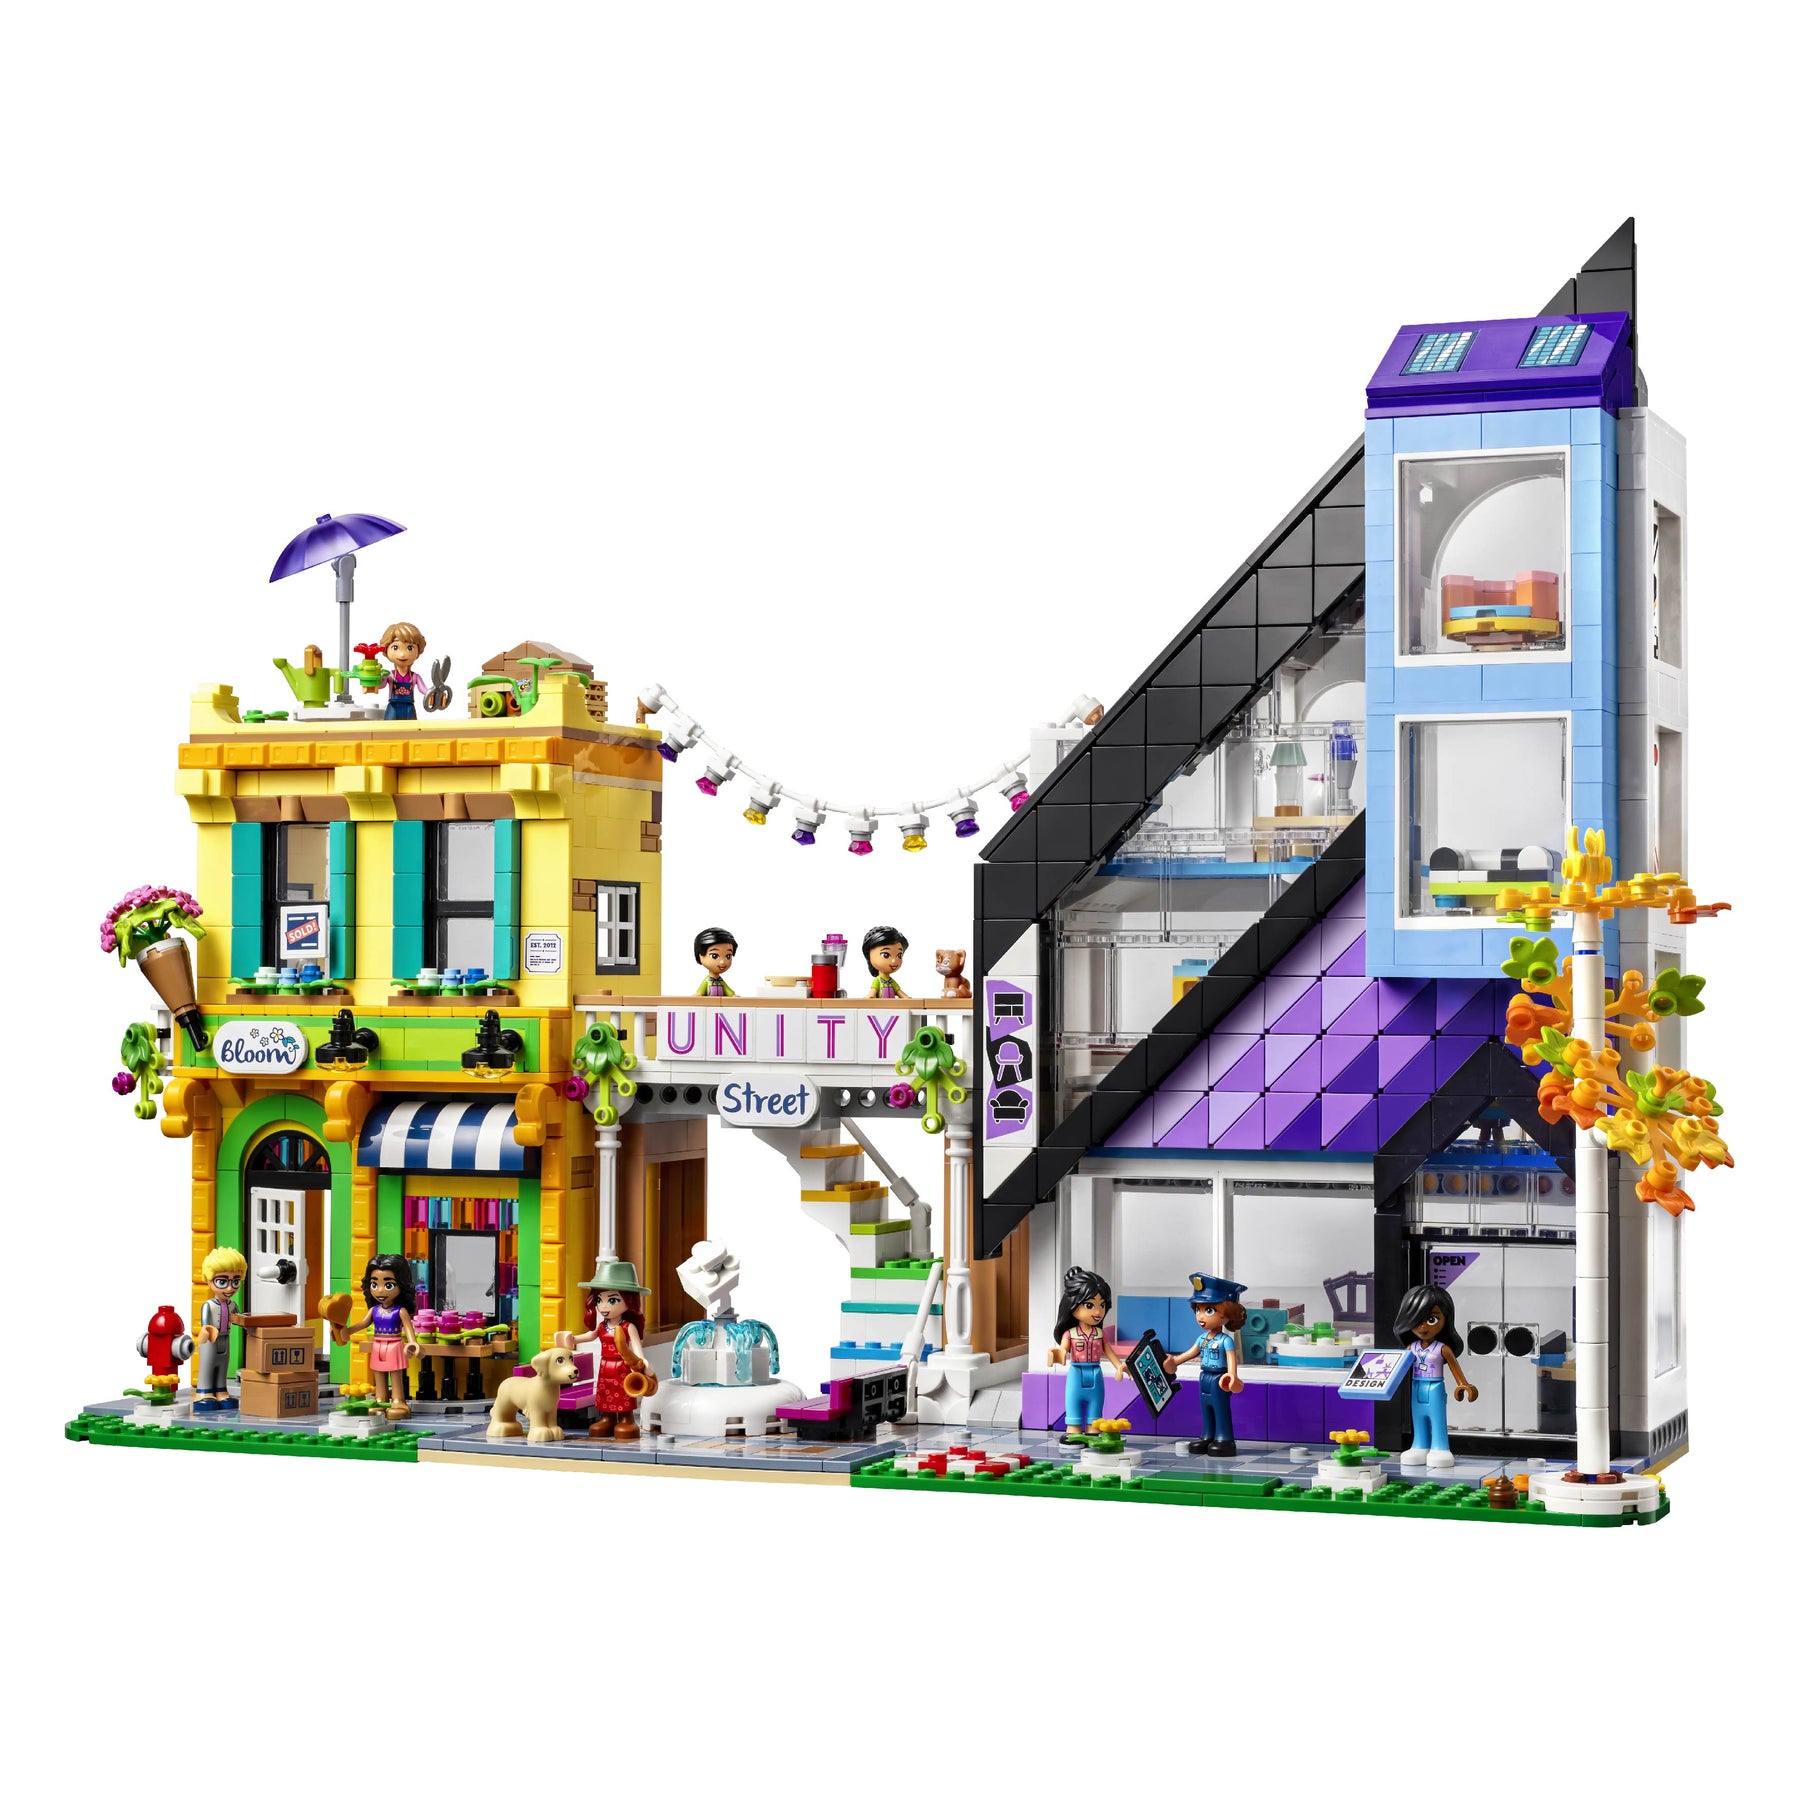 LEGO Classic Fun Function Store Display - 38.5 cm x 20 cm x 25 cm